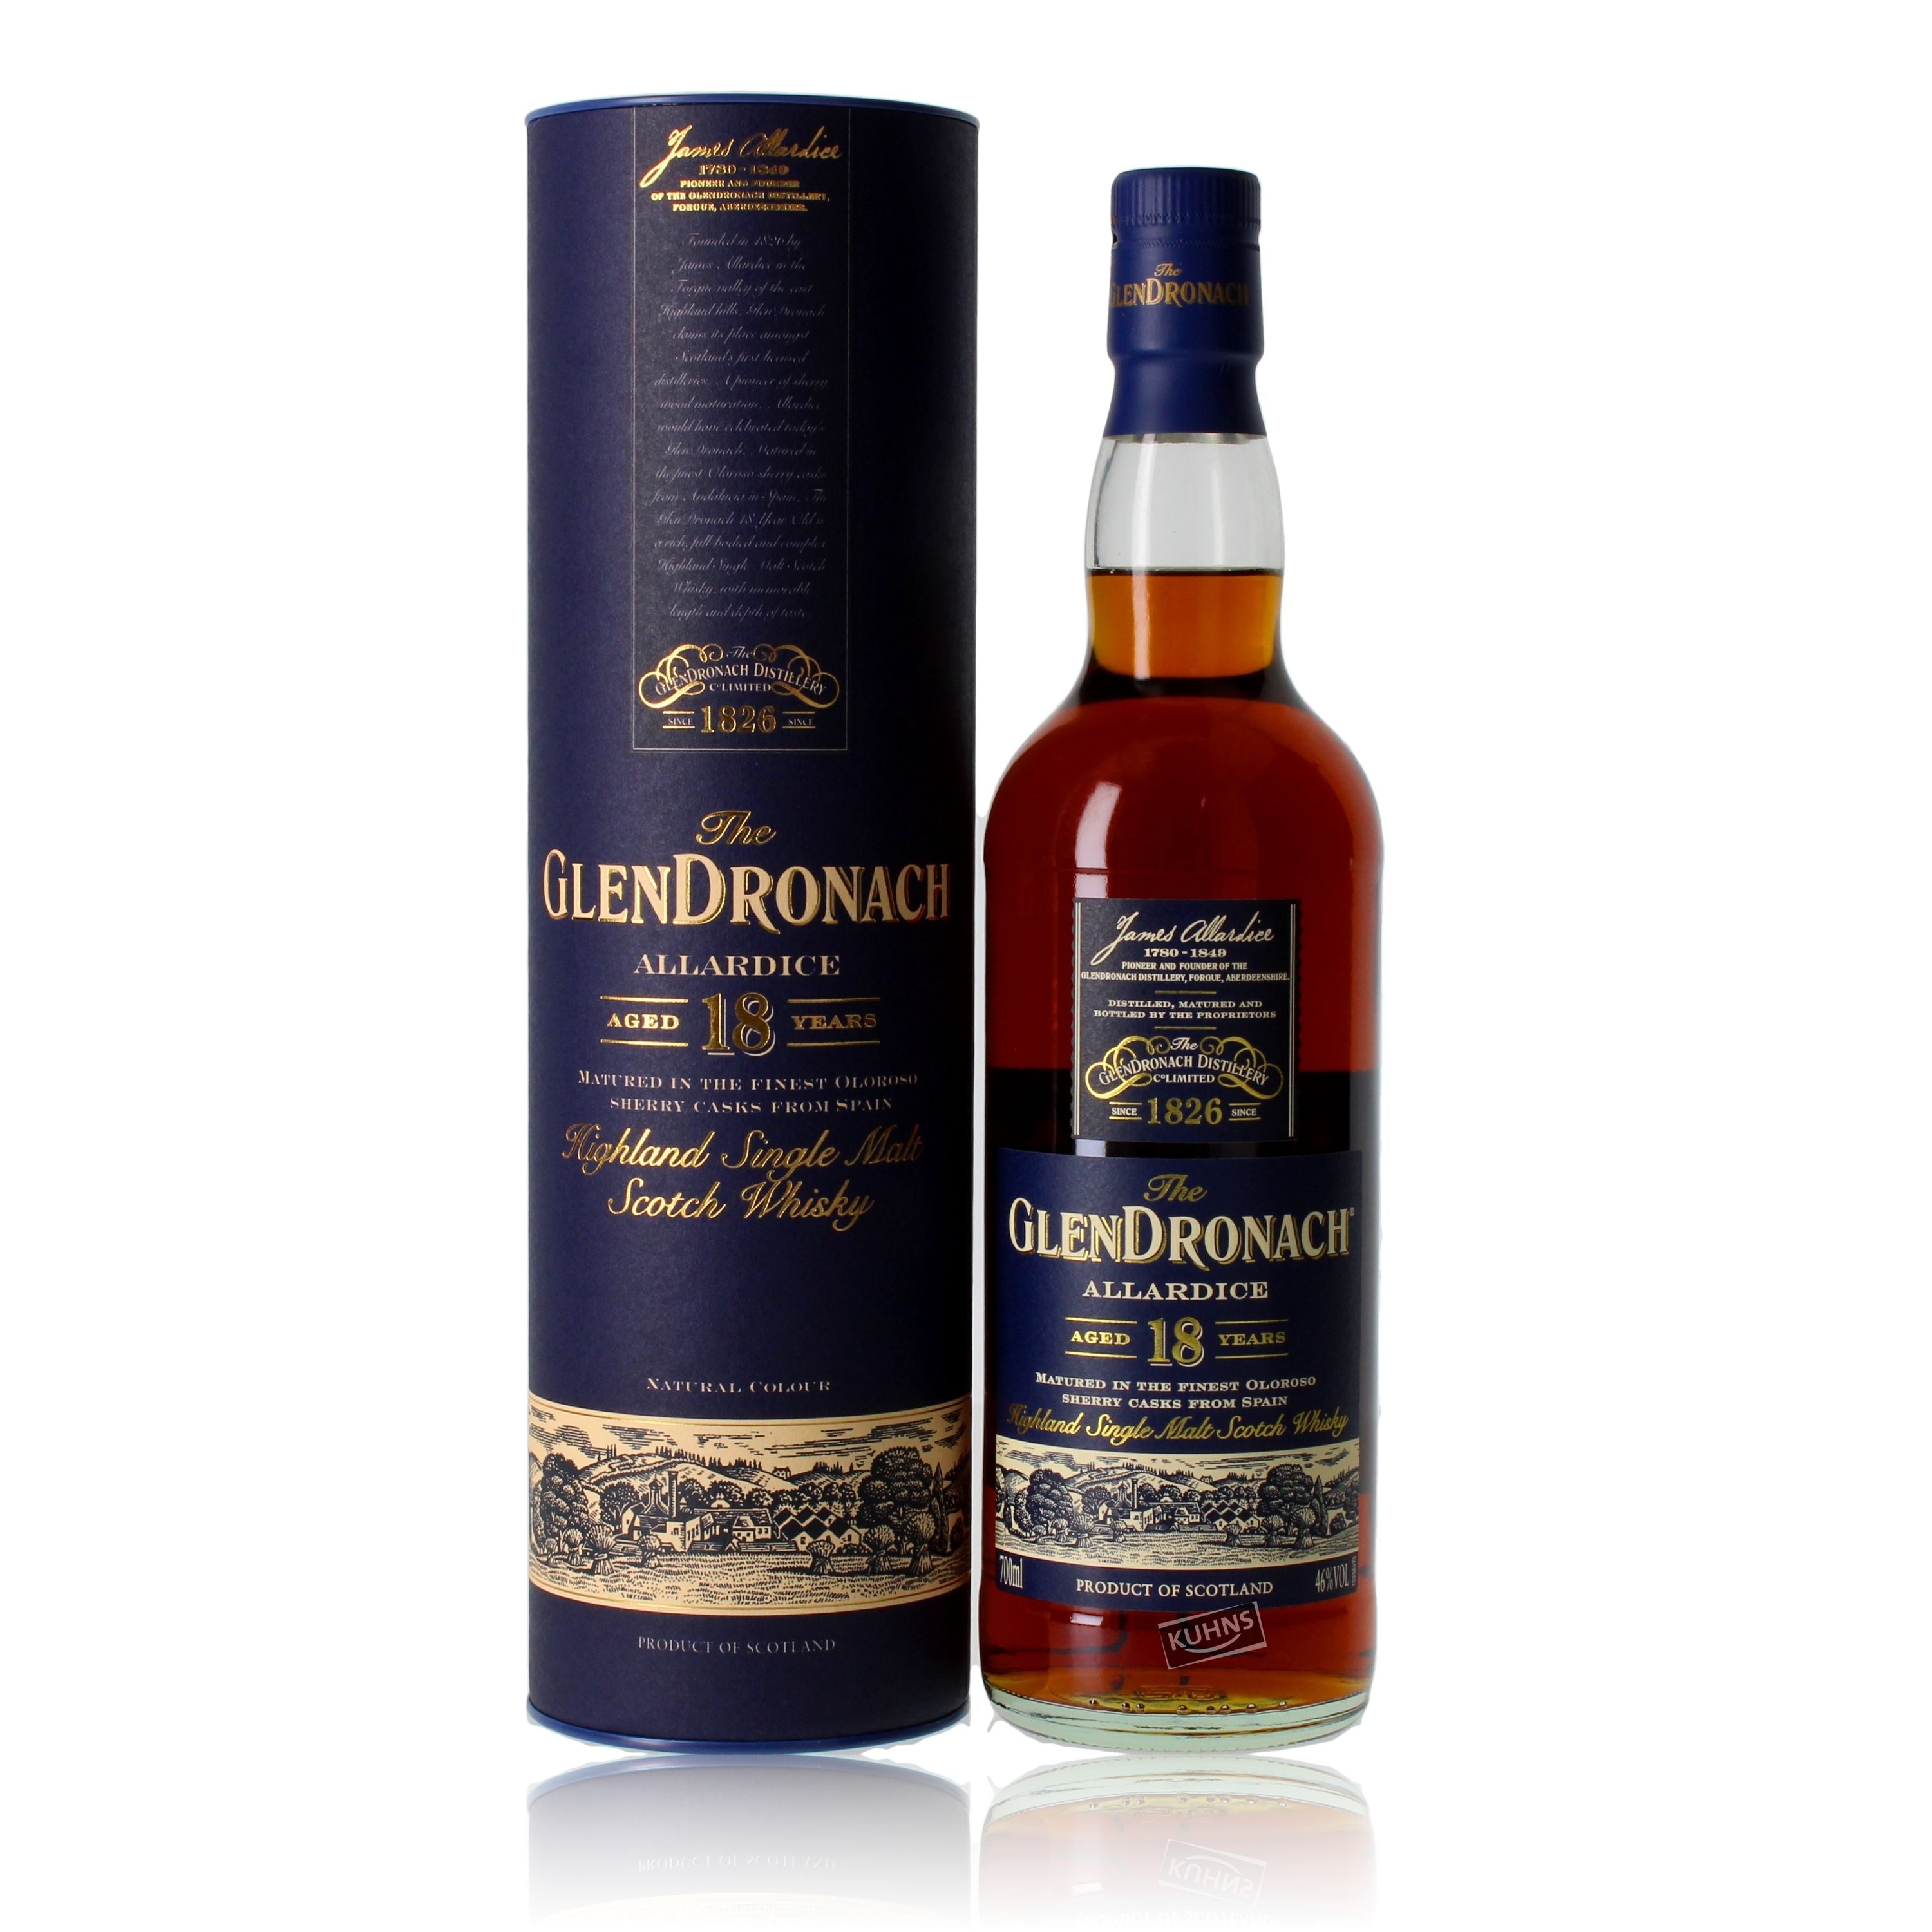 GlenDronach 18 Years Allardice Highland Single Malt Scotch Whiskey 0.7l, alc. 46% by volume